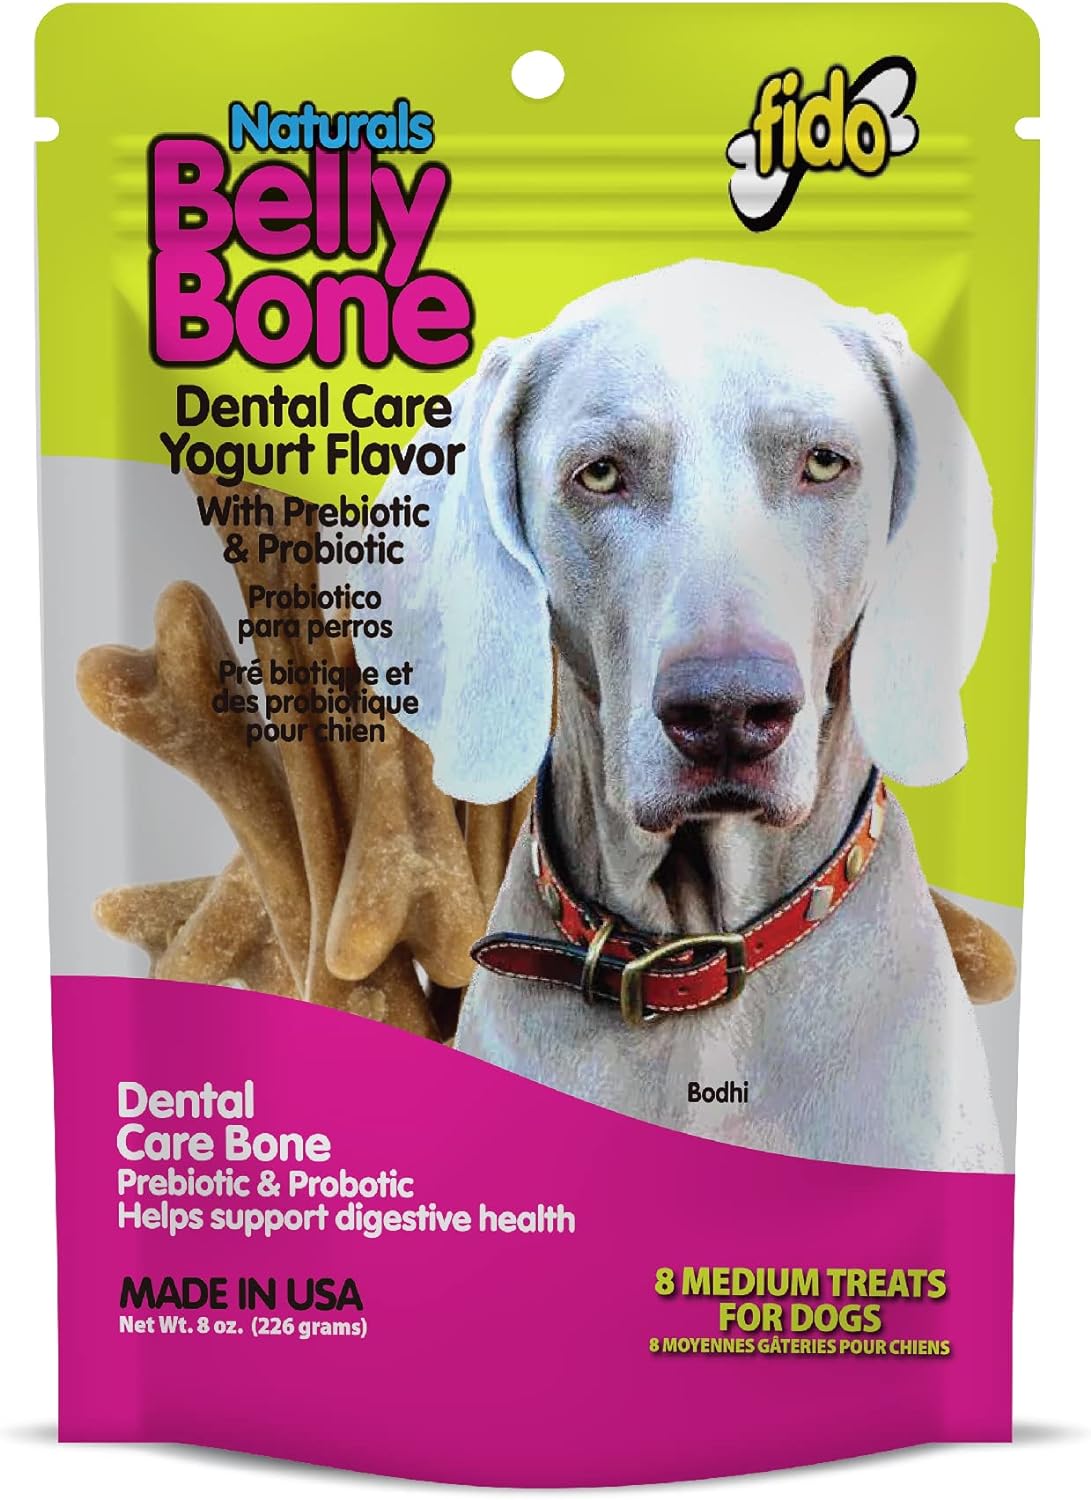 Fido Belly Bones for Dogs, 8 Yogurt Flavor Medium Dog Dental Treats (Made in USA) - 8 Count Dog Treats for Medium Dogs - Plaque and Tartar Control for Fresh Breath, Digestive Health Support